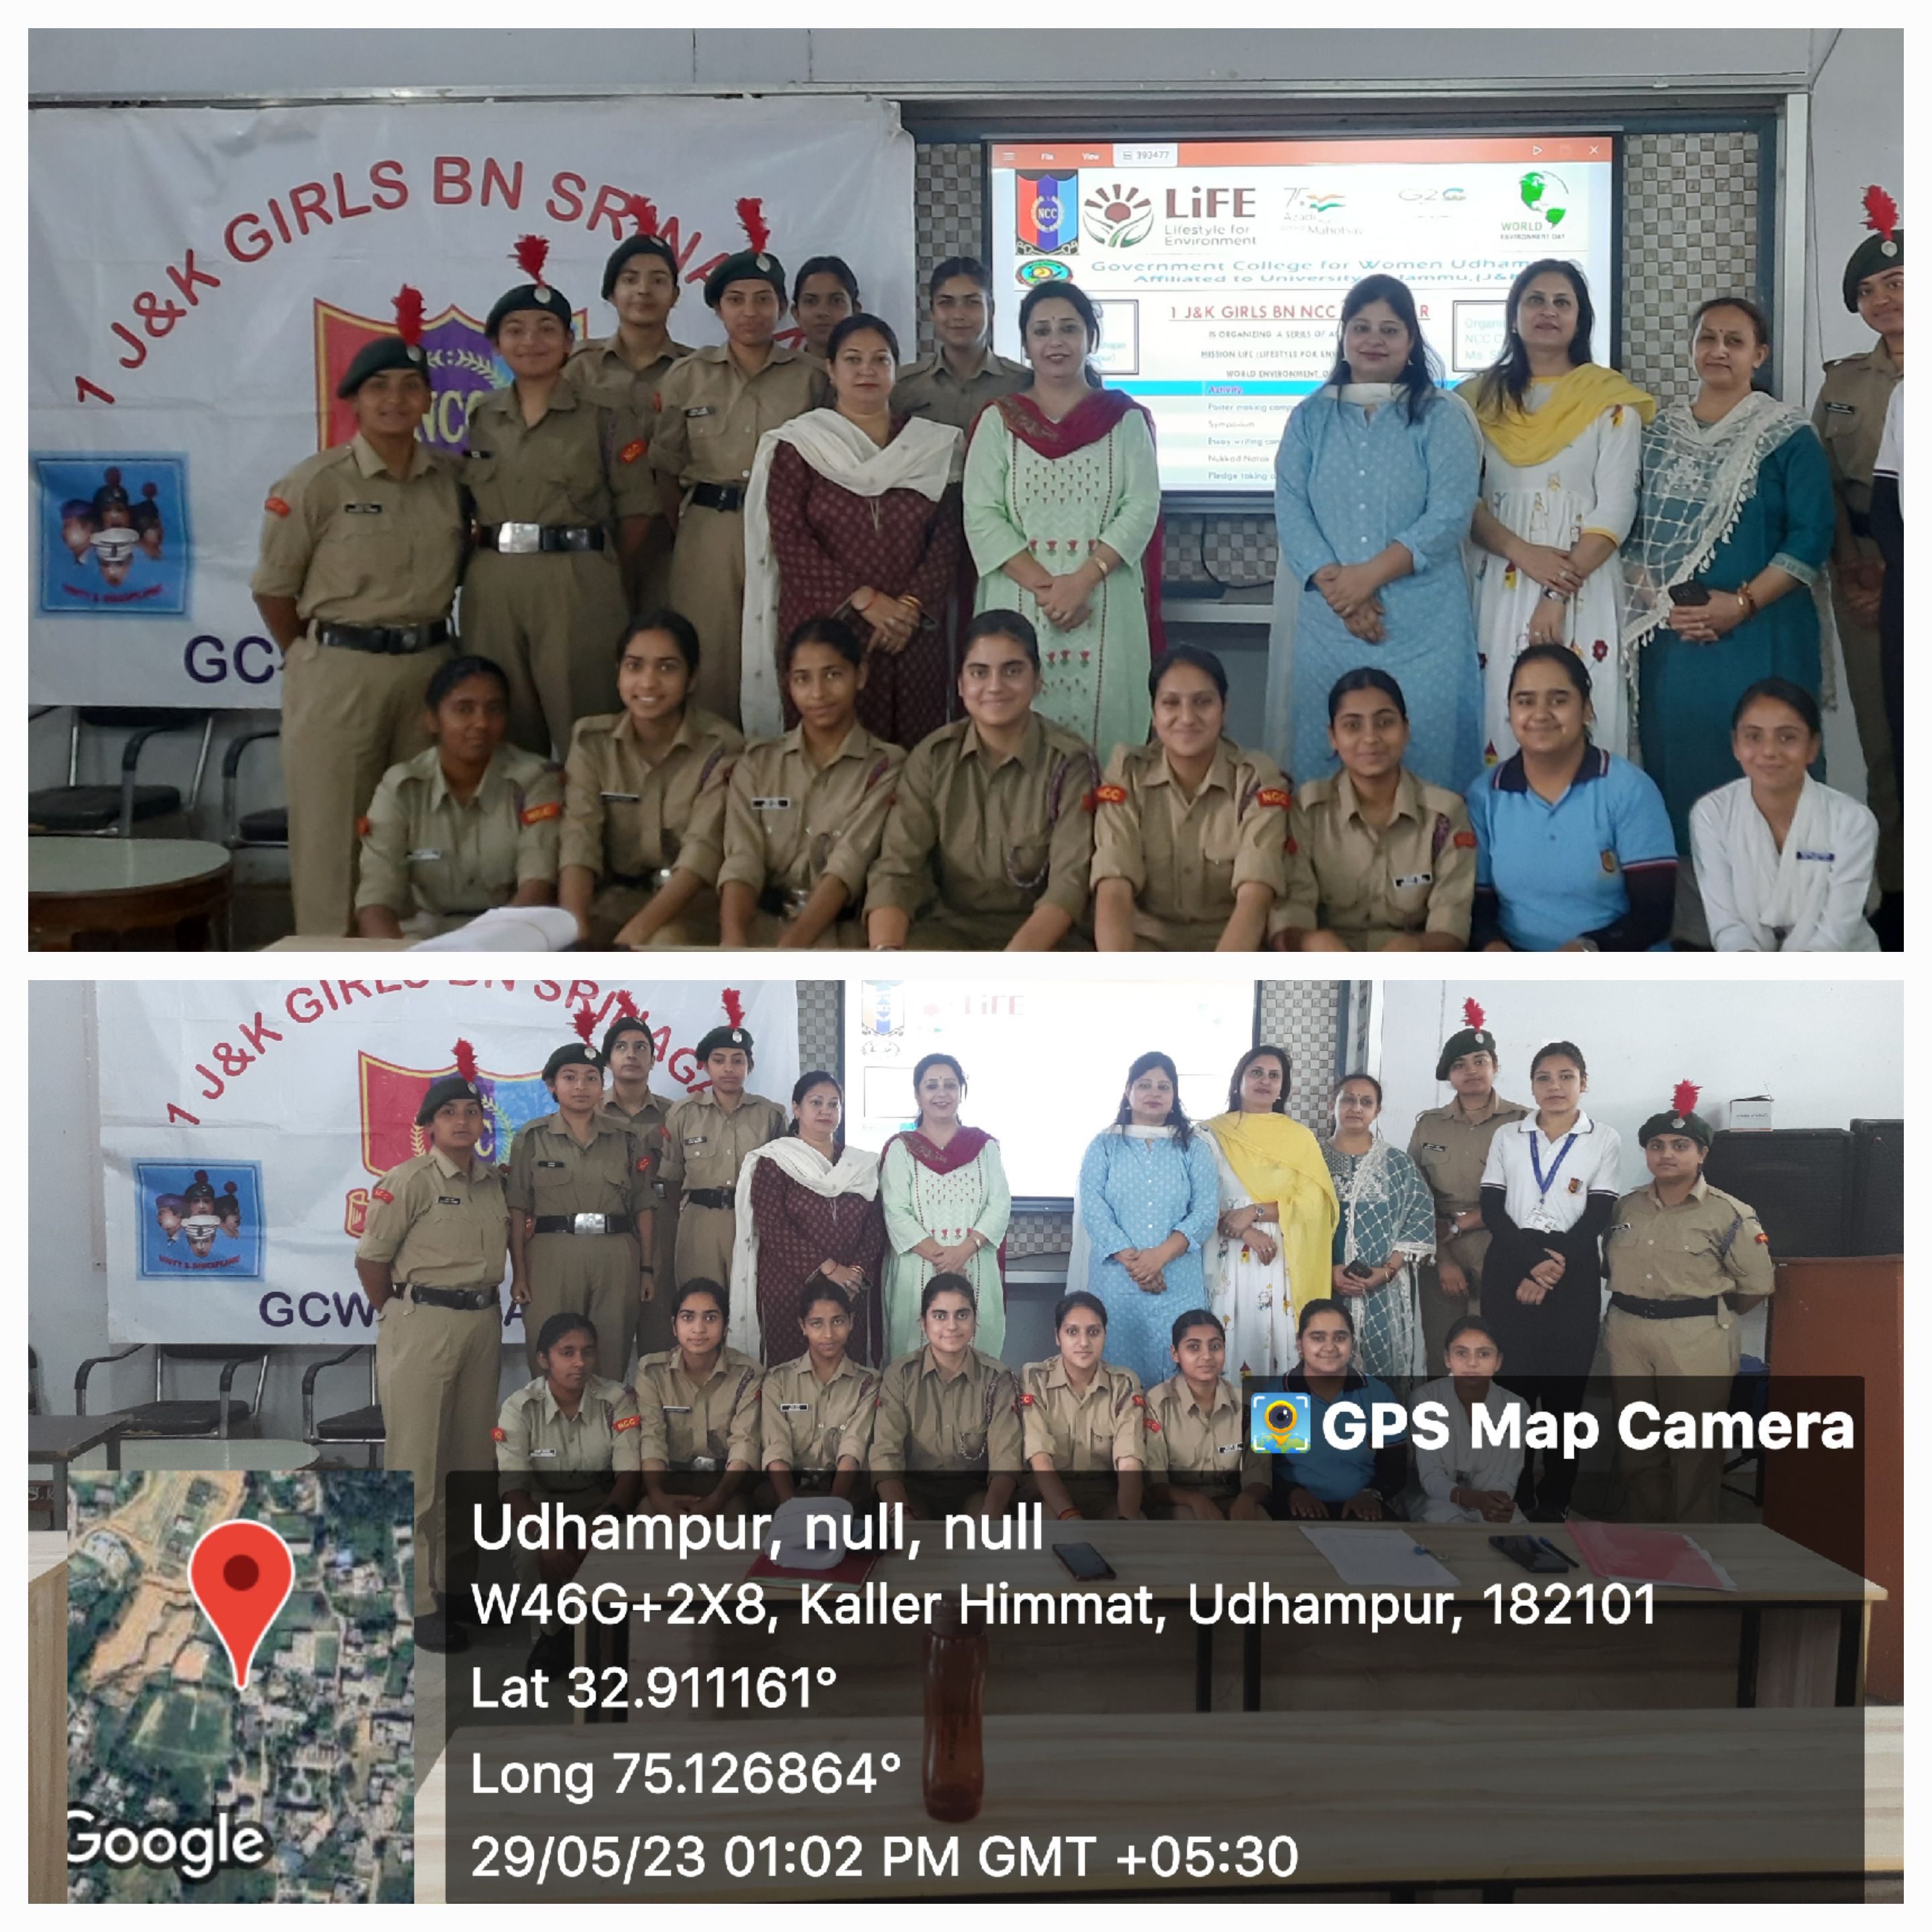 NCC Unit  (1 J&K Girls Battalion NCC, Srinagar) of GCW Udhampur organised Smposium under Mission Life for Environment 